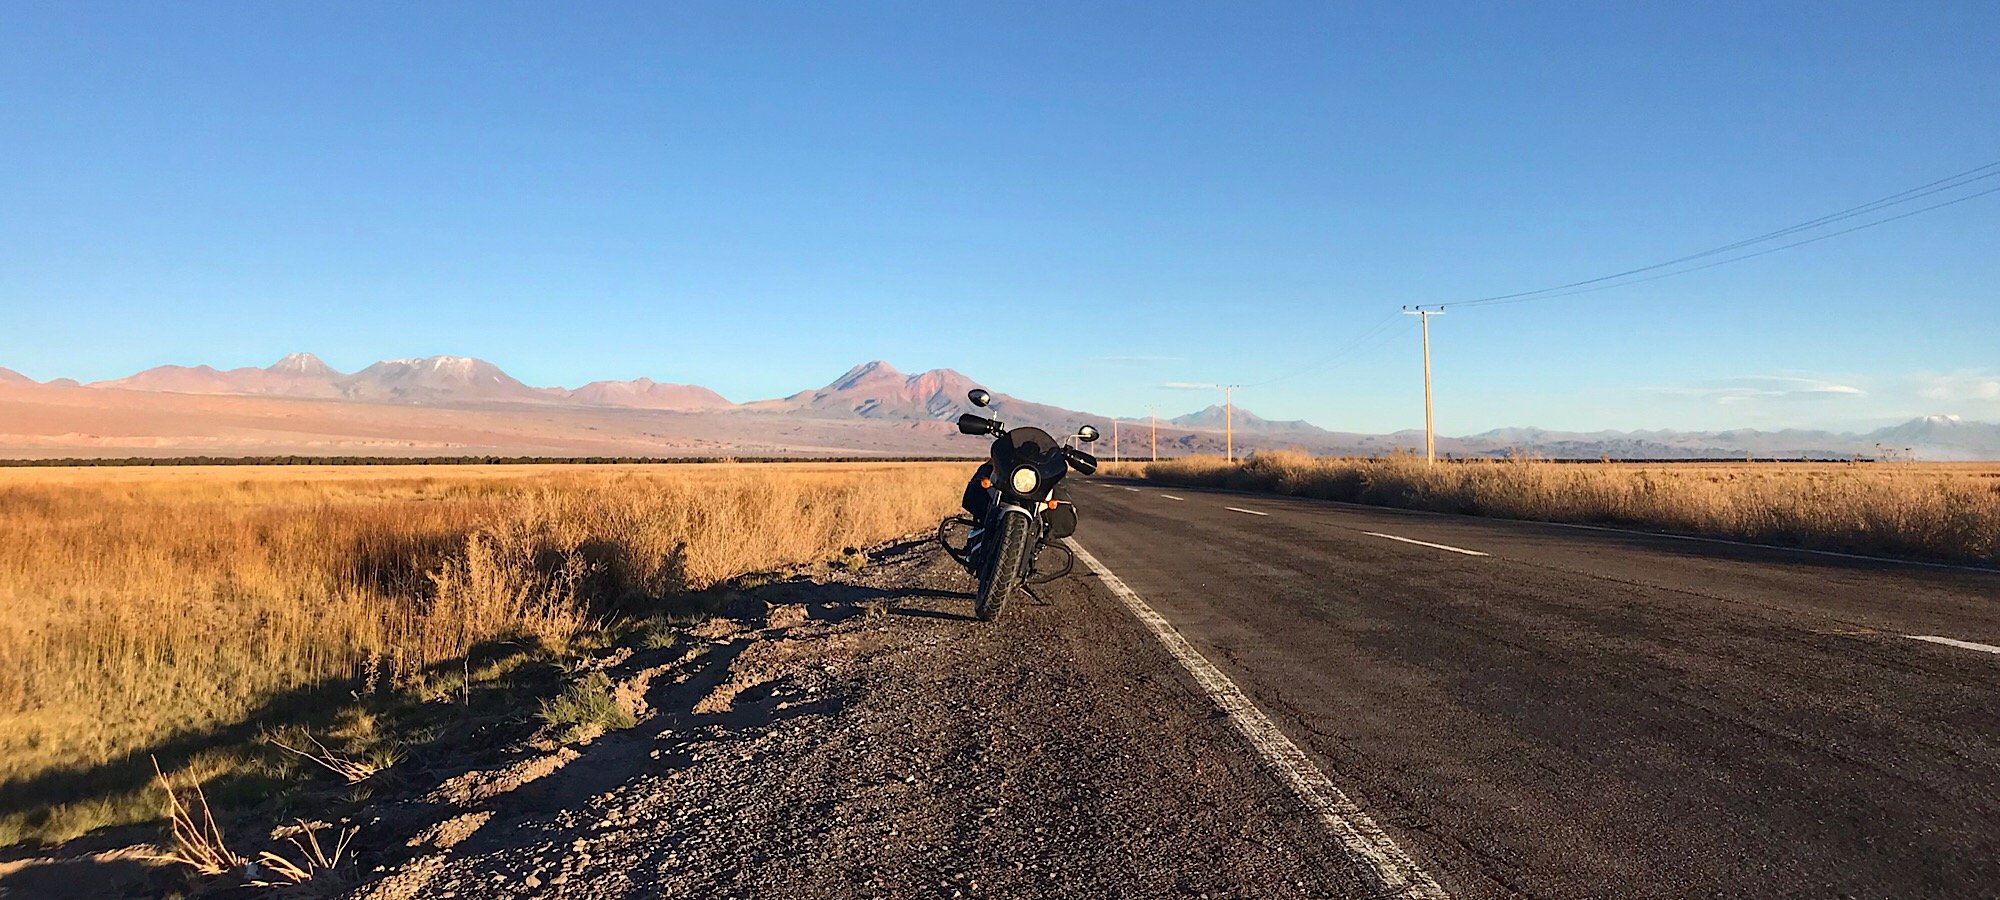 2019-Riding-the-Atacama-Desert-lead.jpg 2019-Riding-the-Atacama-Desert-lead.jpg